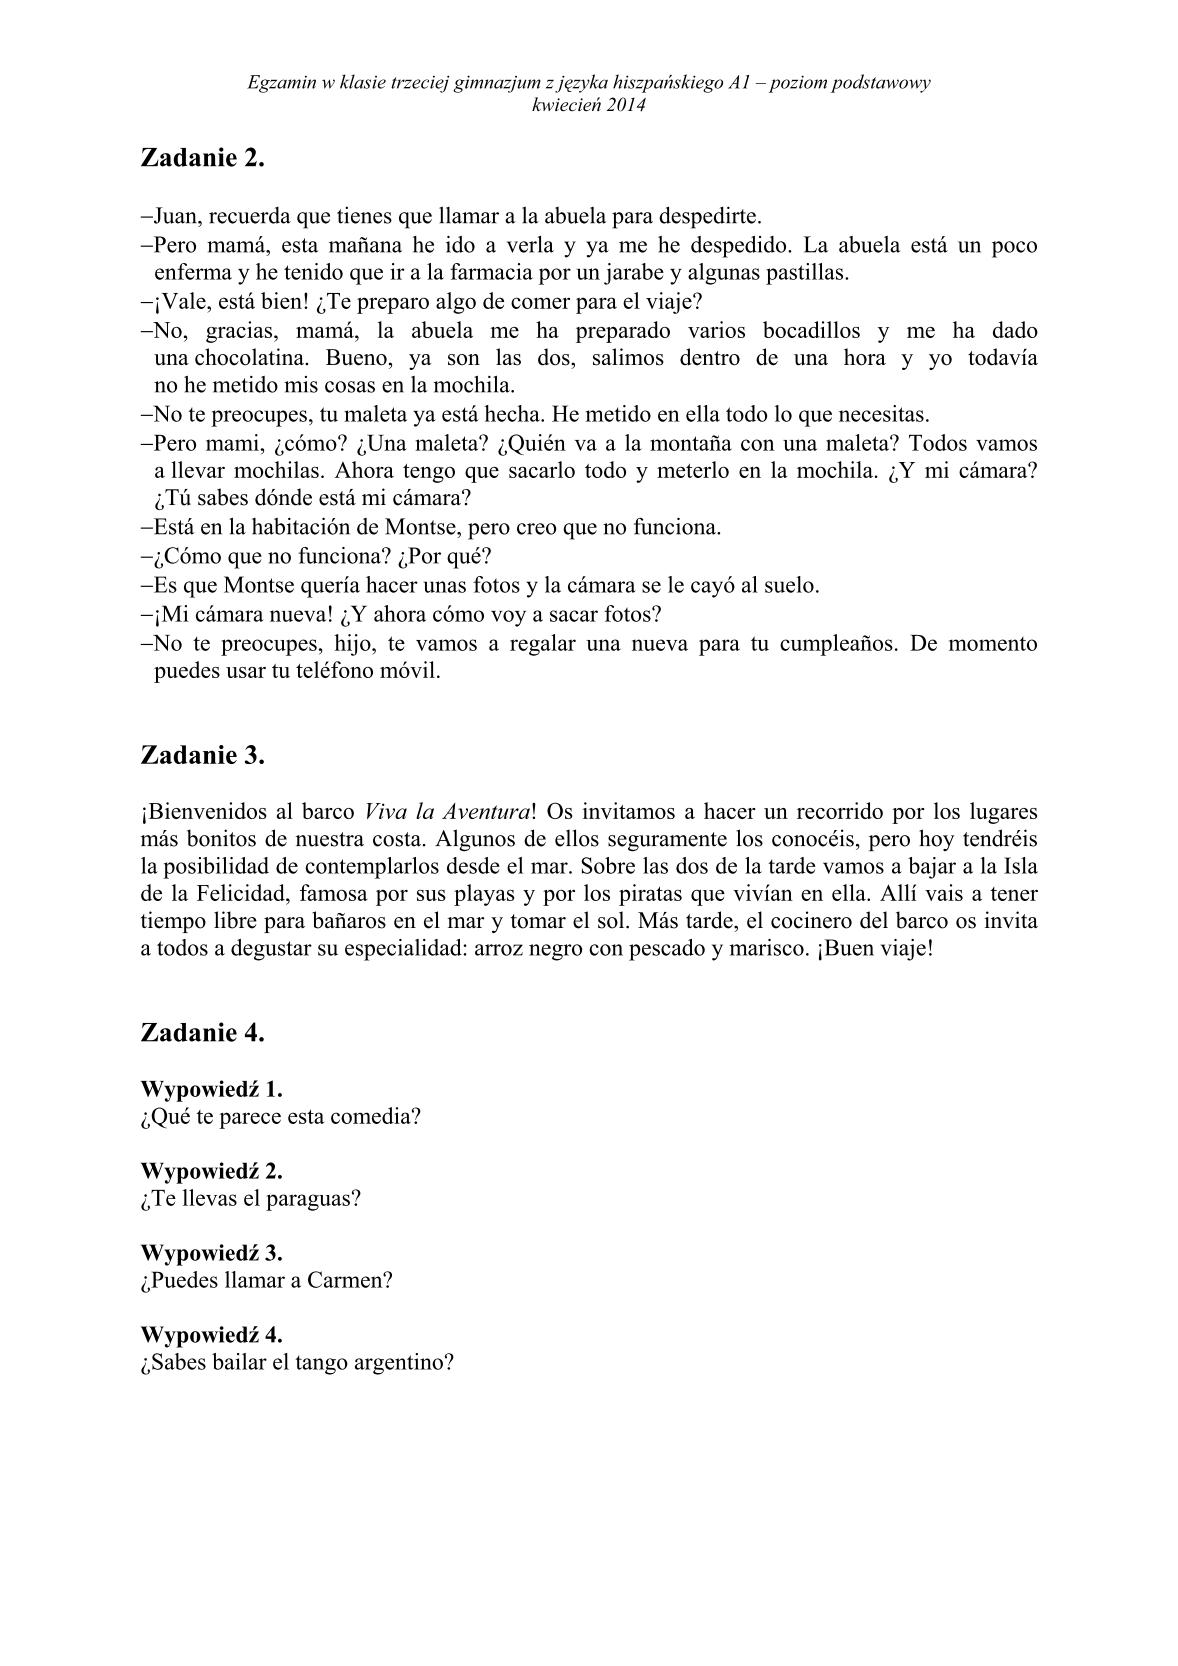 transkrypcja-hiszpanski-poziom-podstawowy-egzamin-gimnazjalny-25.04.2014-2